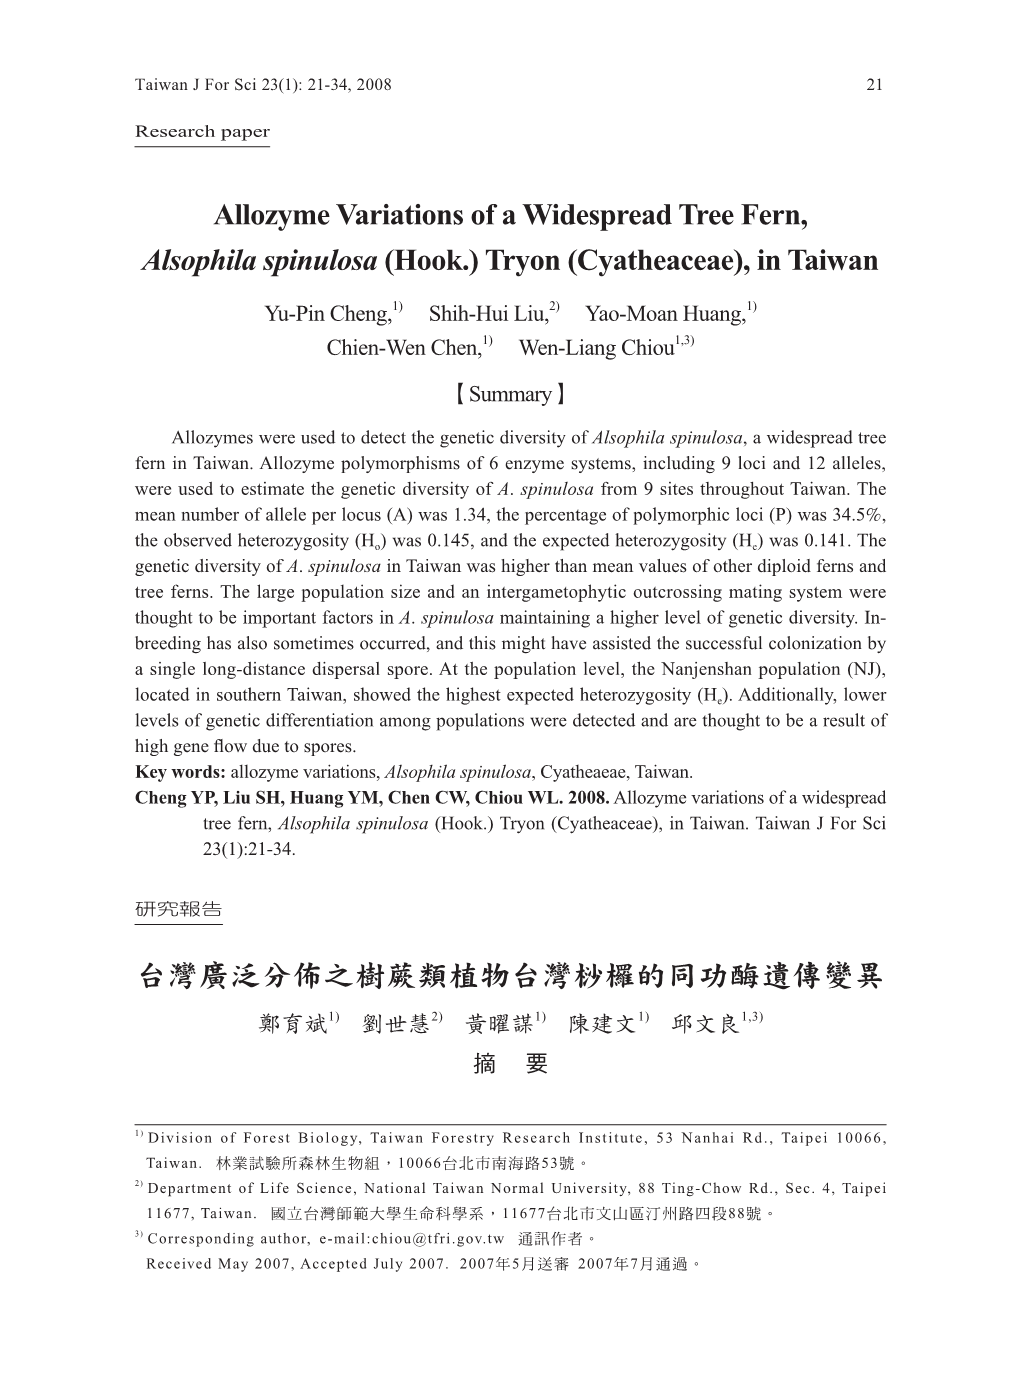 Allozyme Variations of a Widespread Tree Fern, Alsophila Spinulosa (Hook.) Tryon (Cyatheaceae), in Taiwan